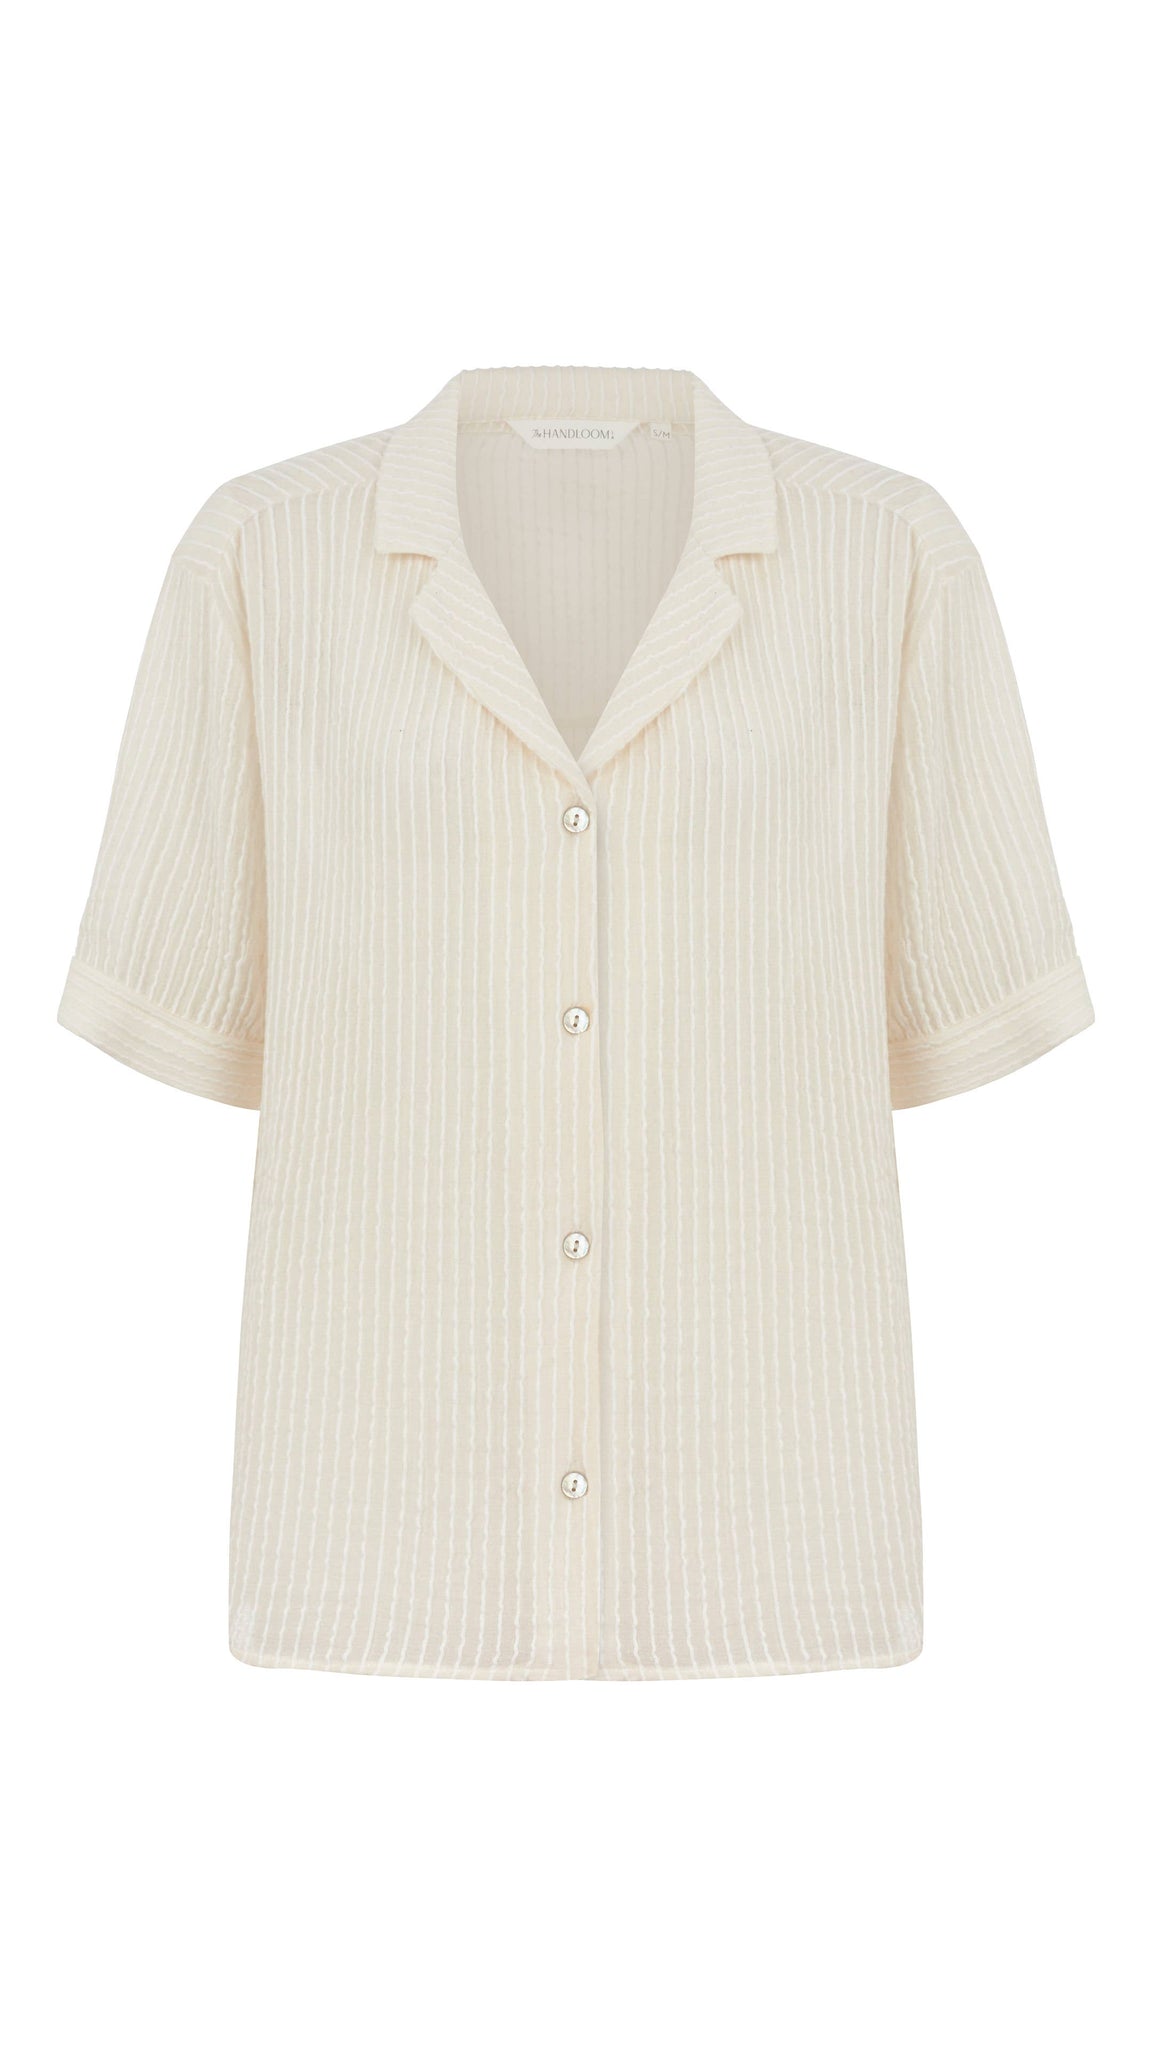 Ocean Shirt - White Stripes S/M